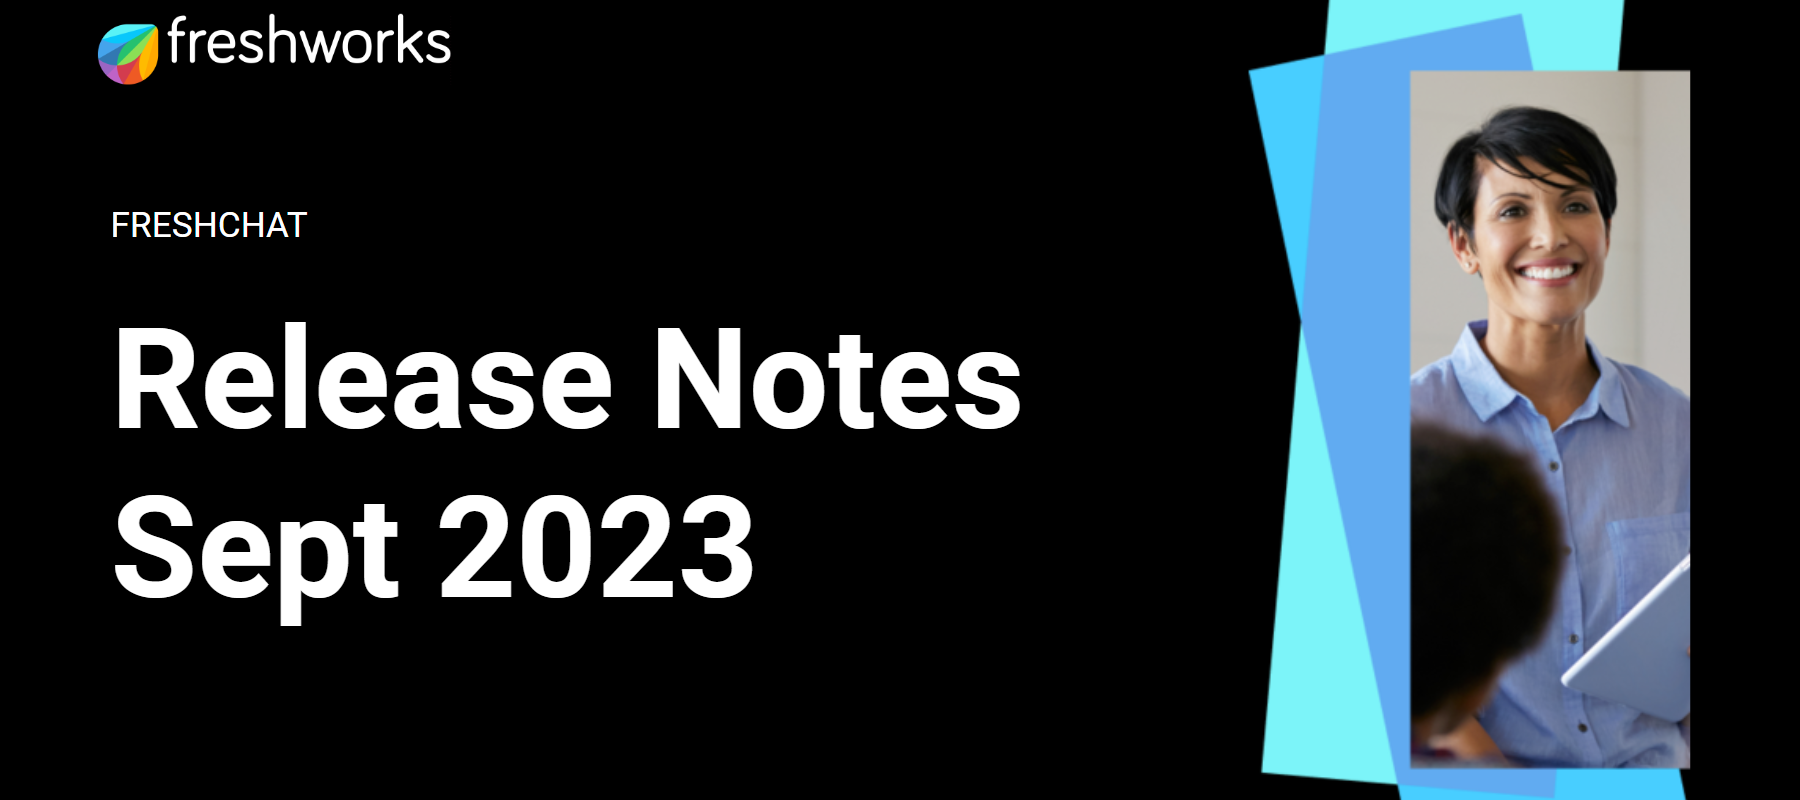 Freshchat Release Notes - September 2023